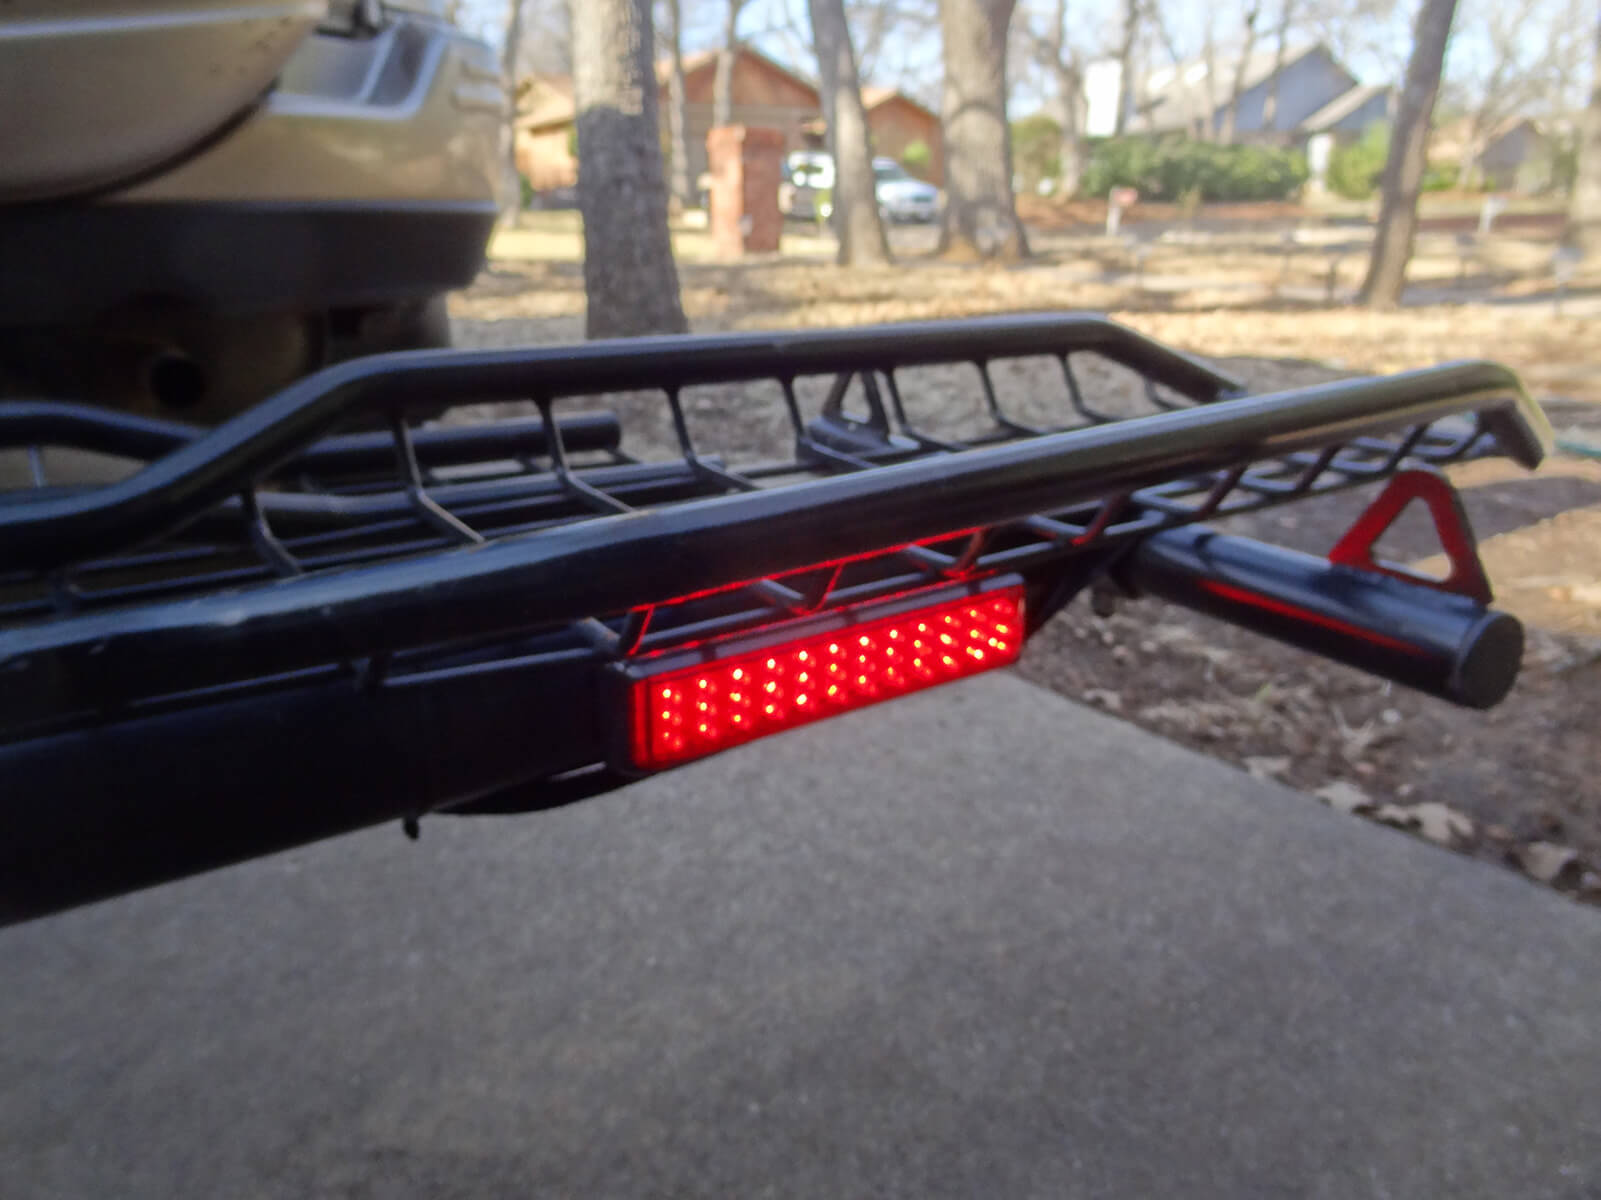 LED light kit on Motorcycle Rack